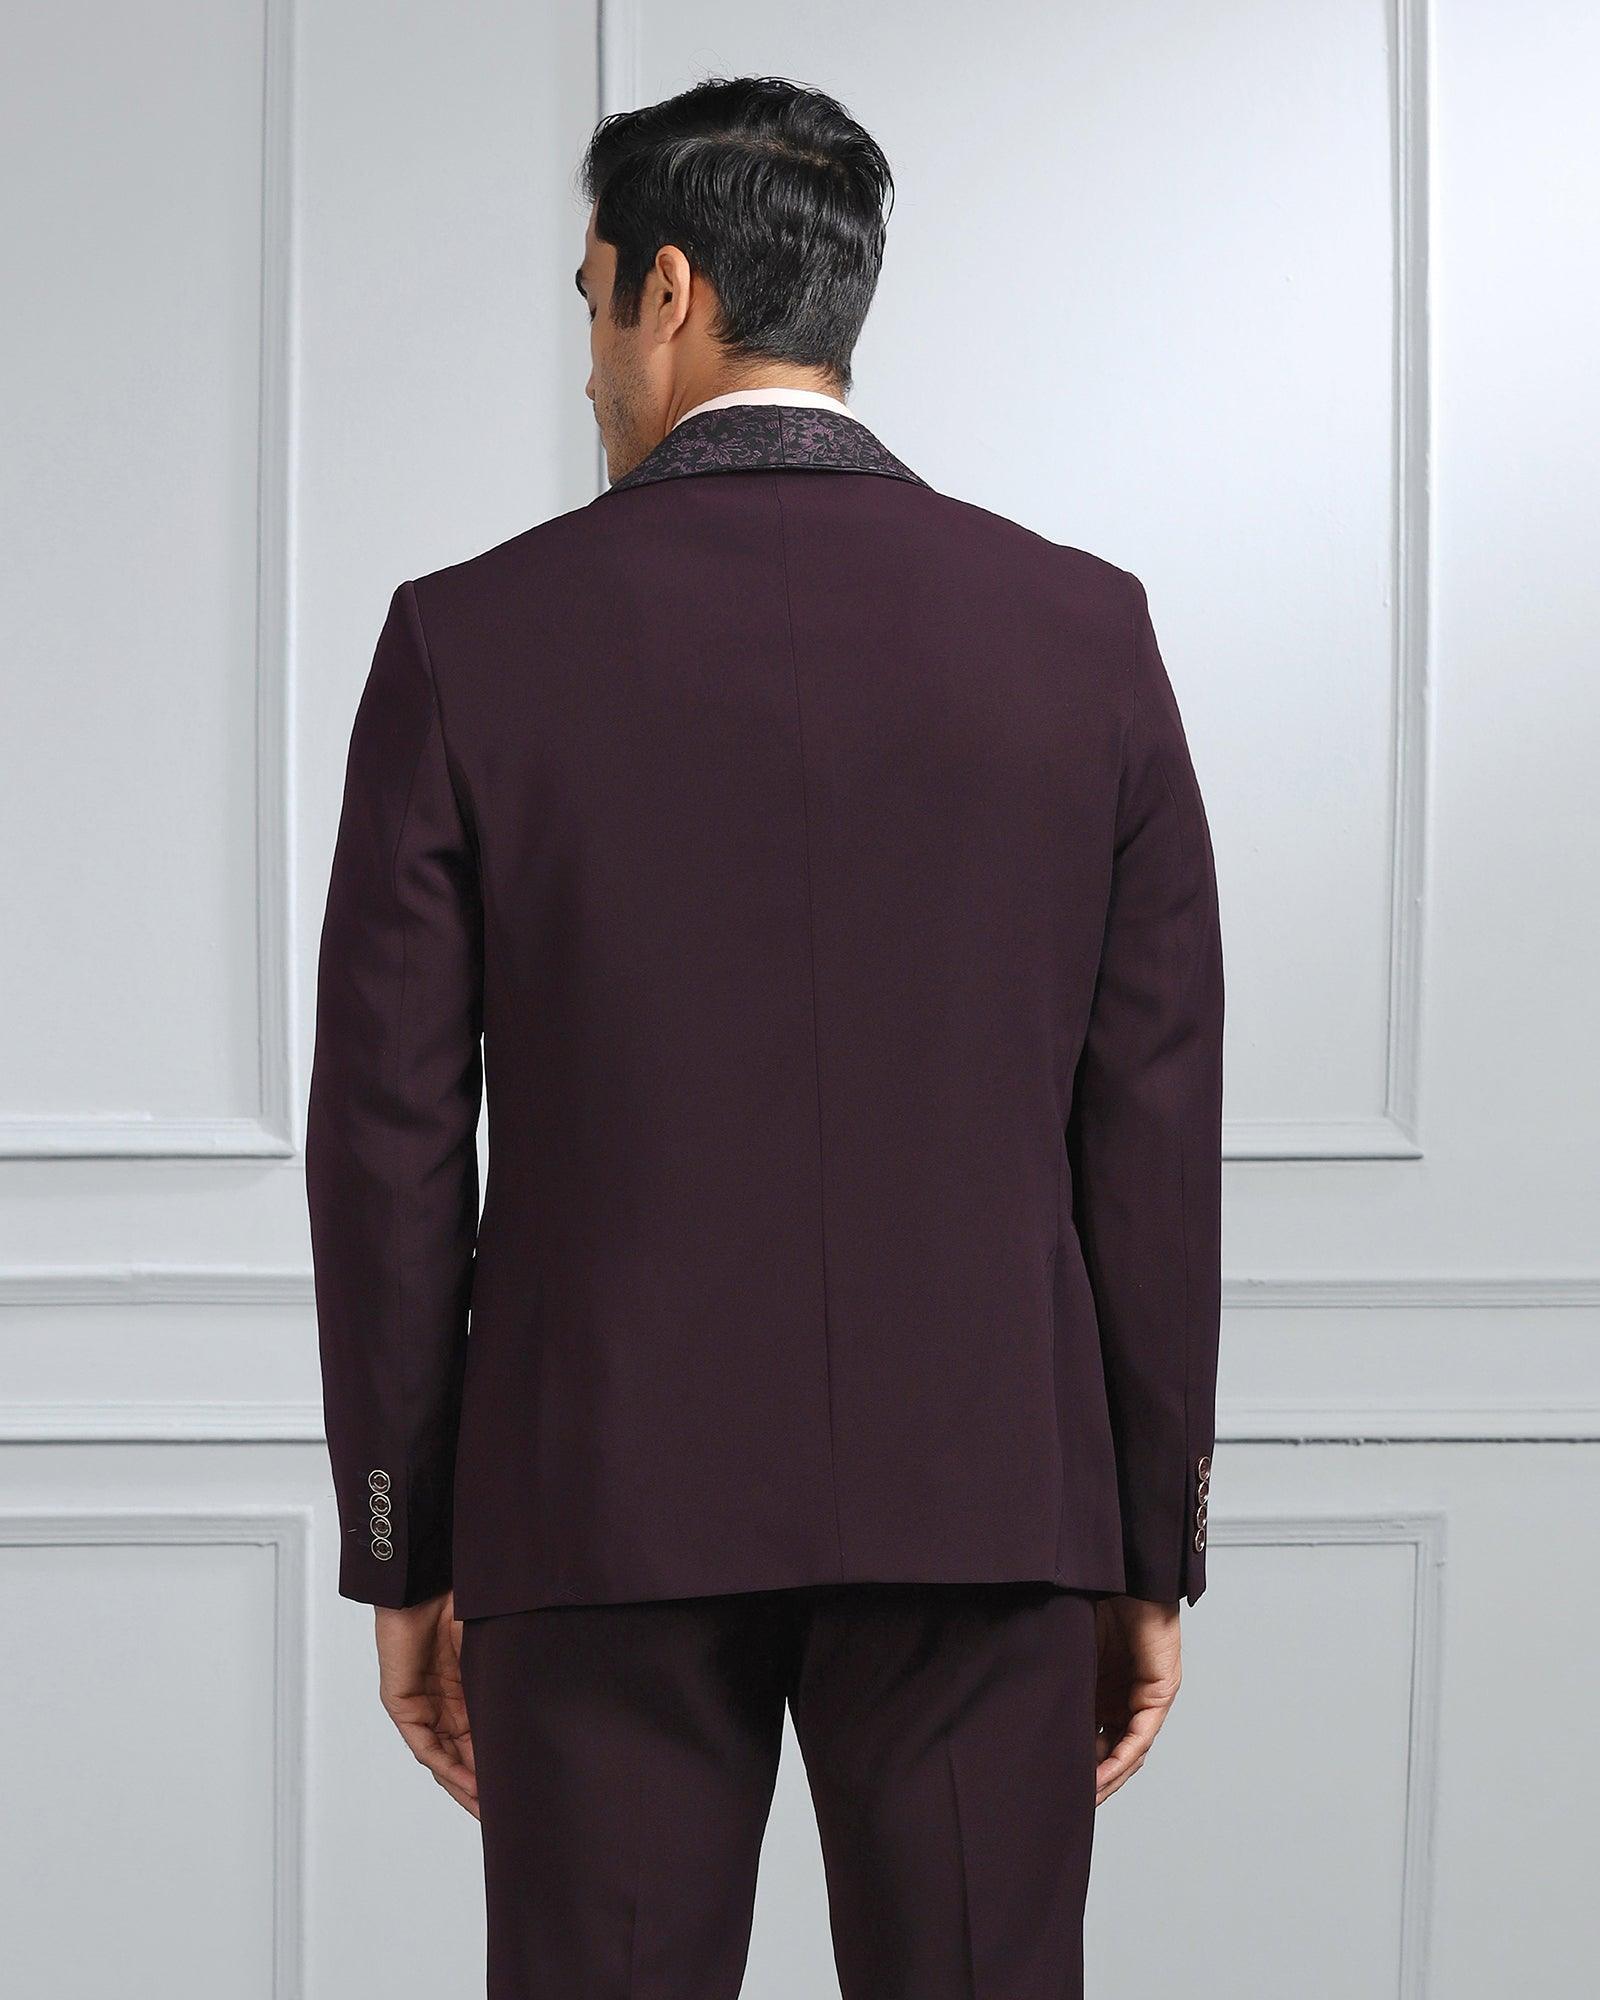 Three Piece Purple Textured Formal Suit - Karren